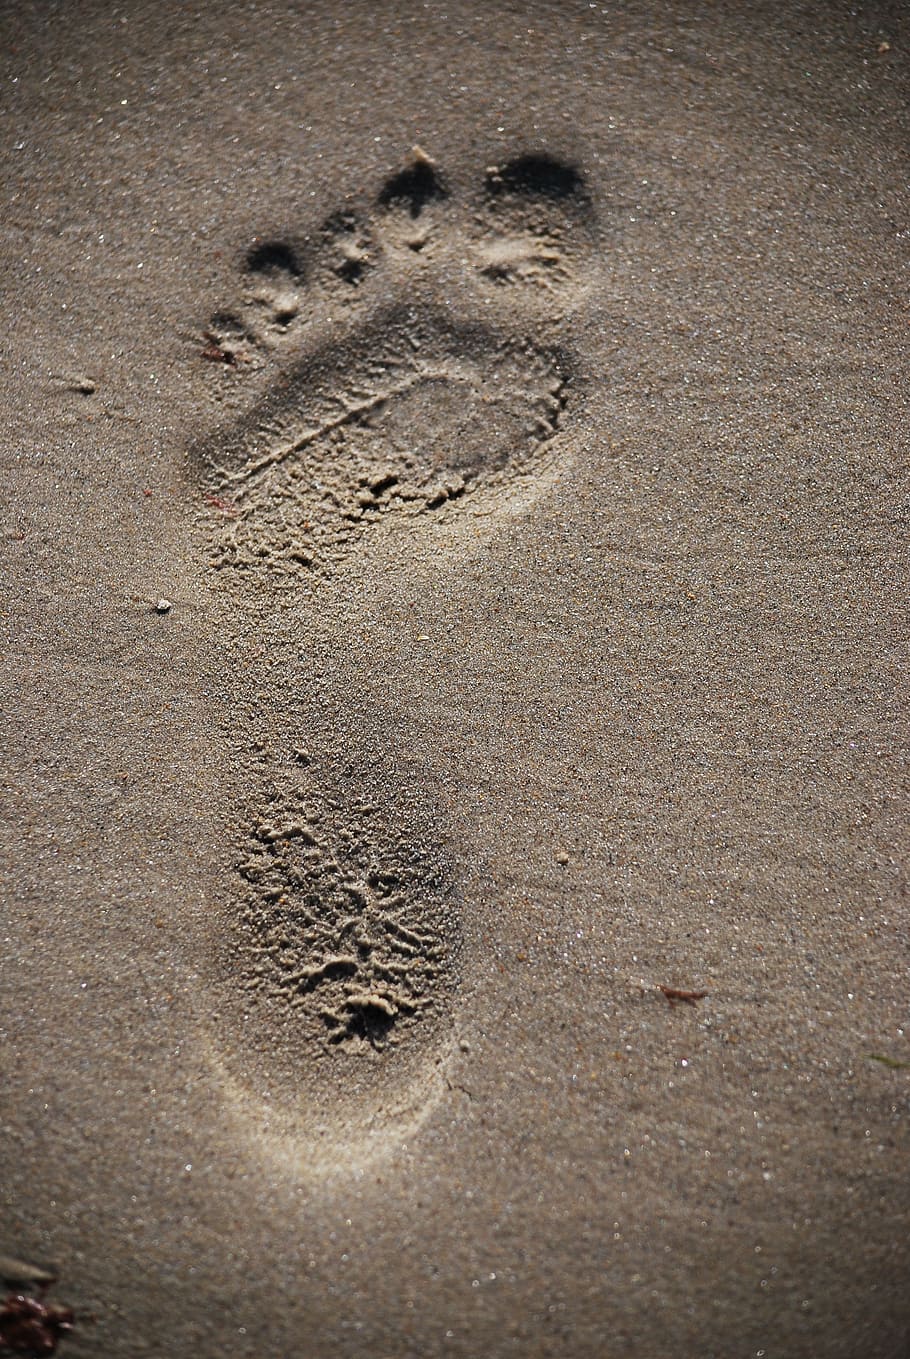 Footprint, Sand, Footstep, Beach, Human, paw print, animal track, track - imprint, land, print